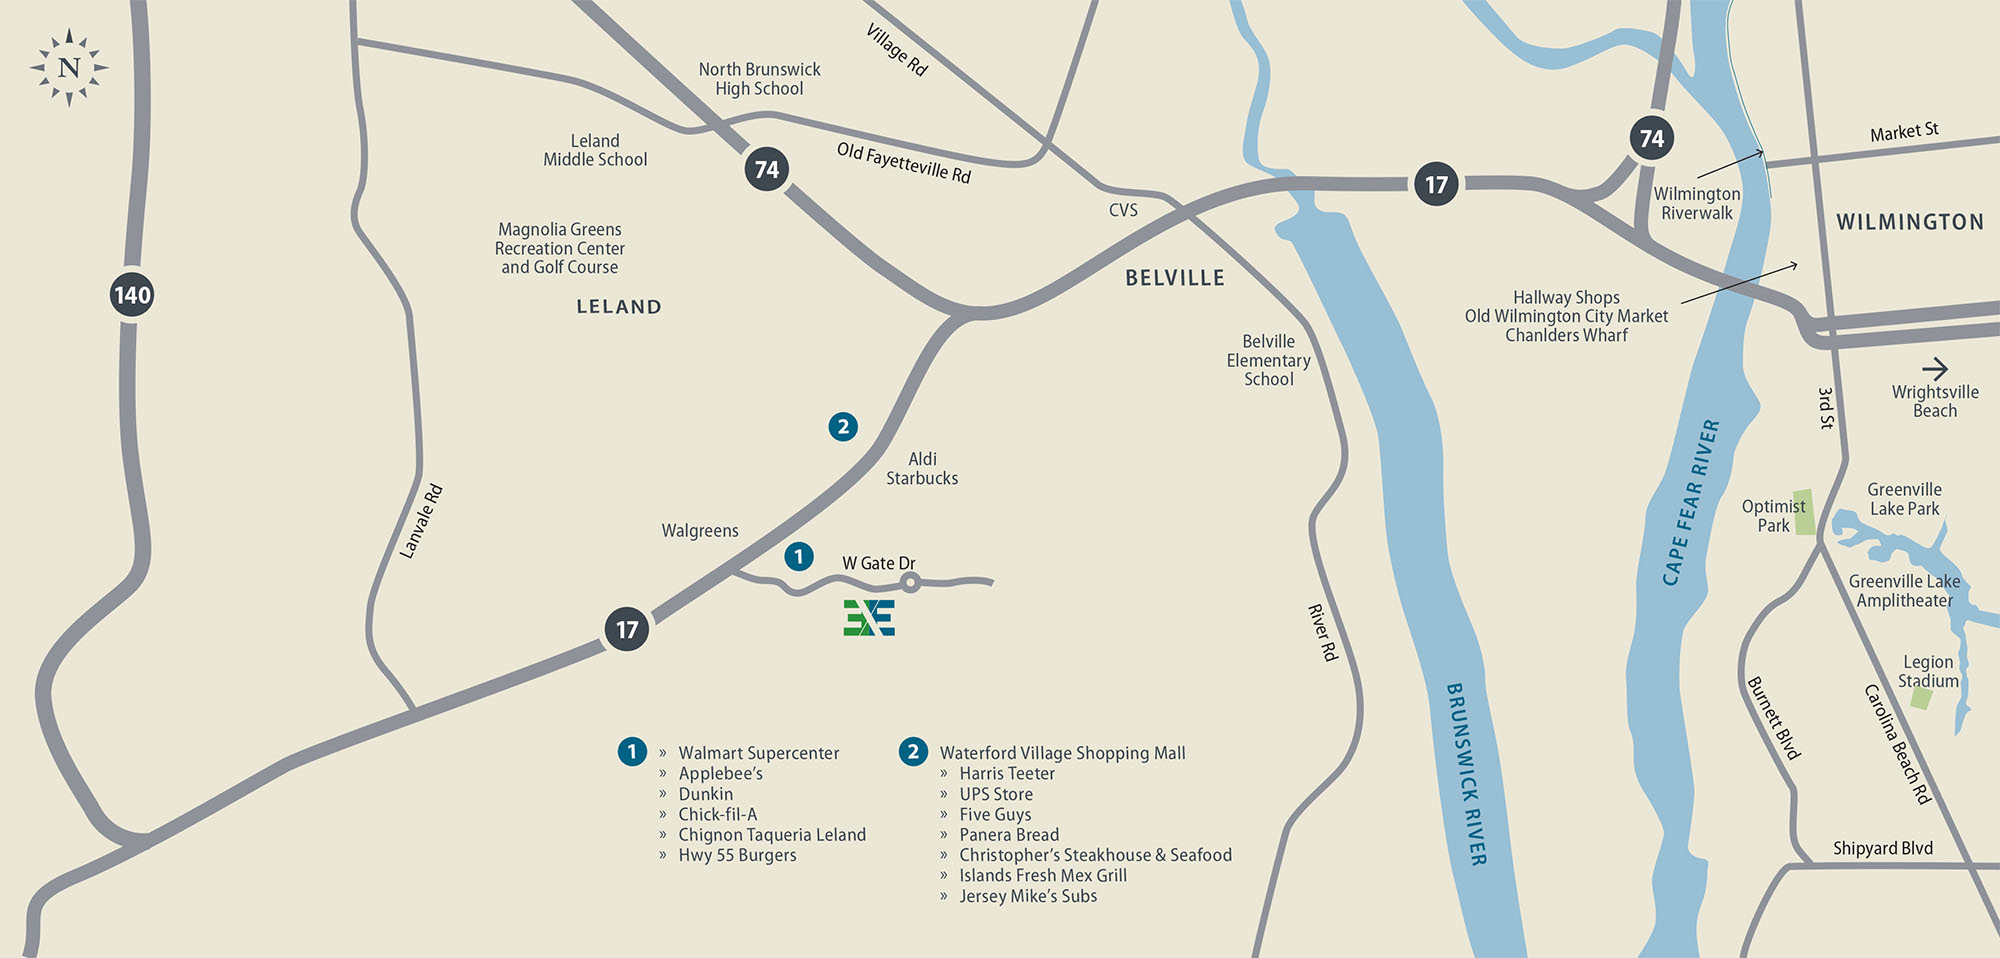 Exchange at Westgate - Map Location